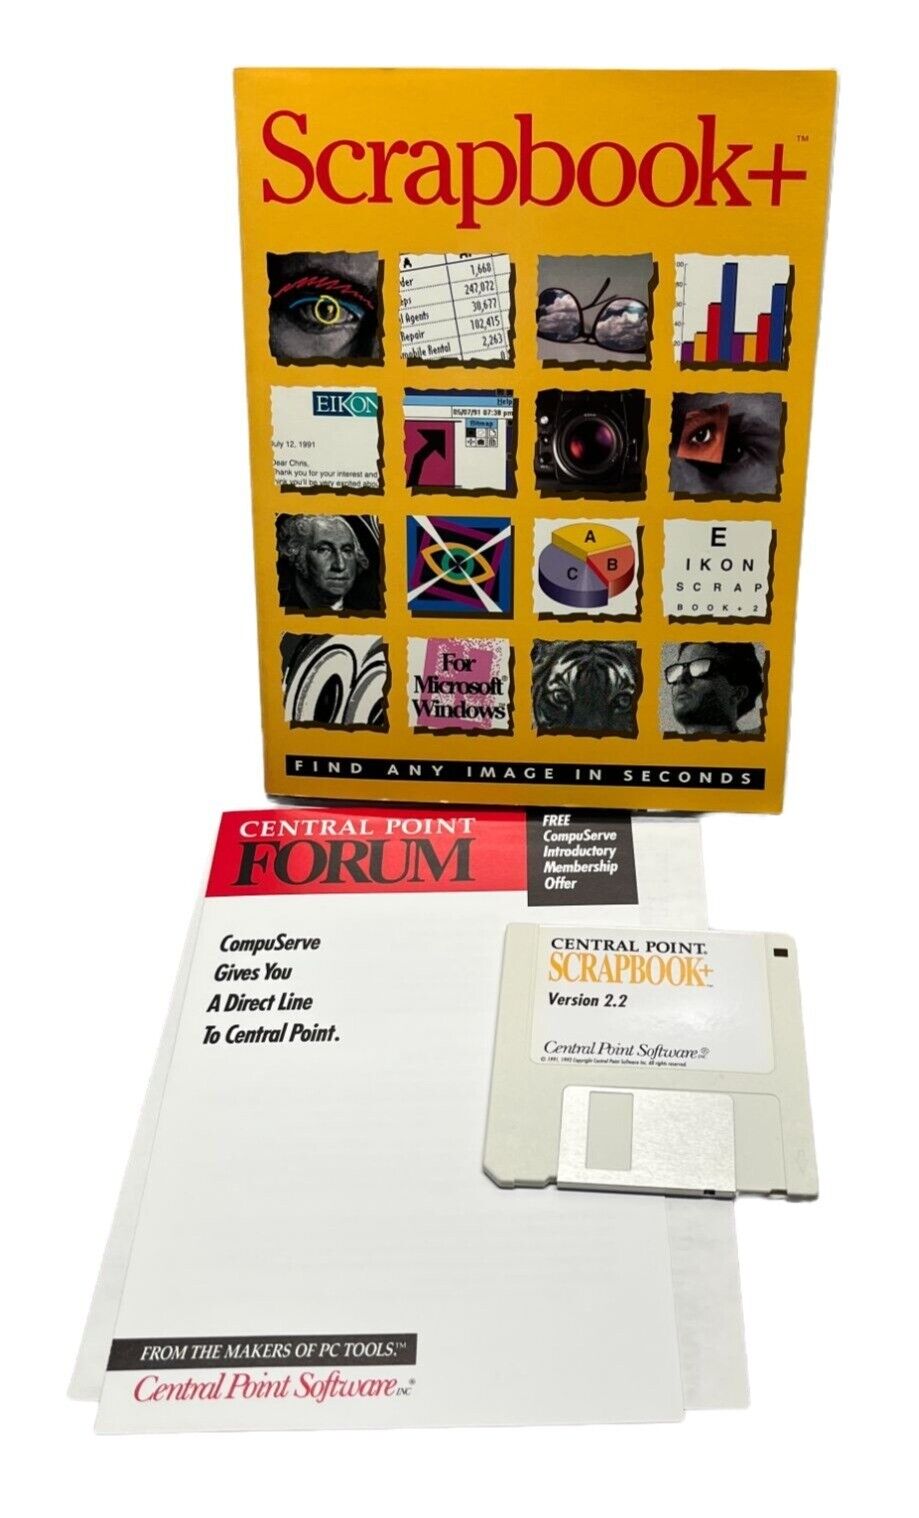 Scrapbook+ Version 2.2 Floppy Disk Software Instructions 1992 ...